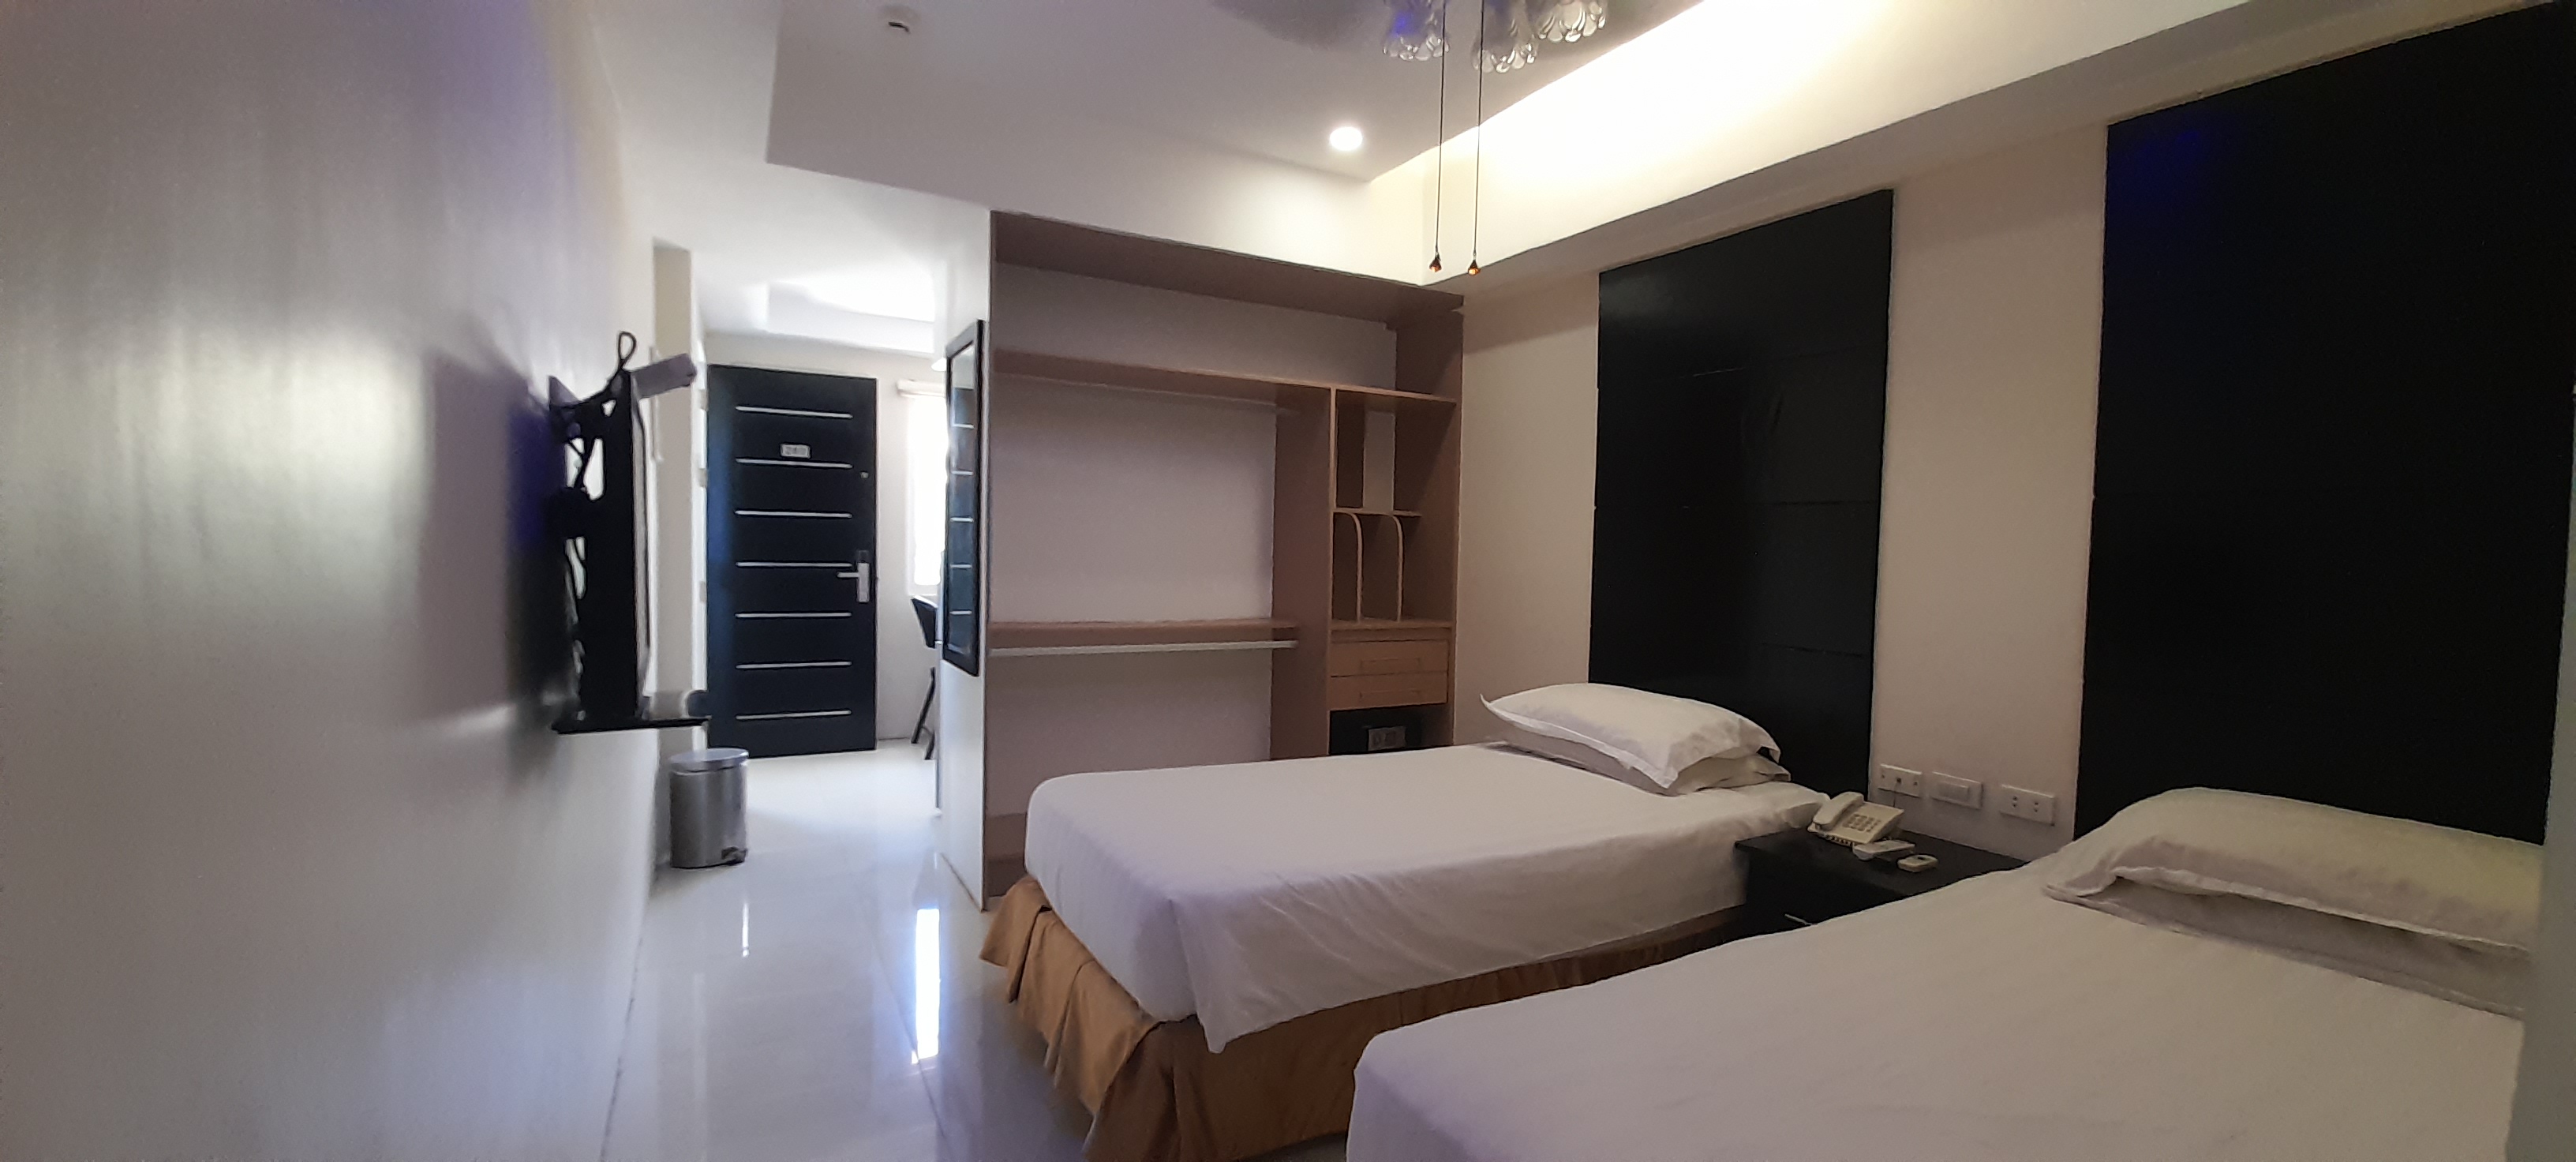 fully-furnished-studio-apartment-in-mandaue-city-cebu